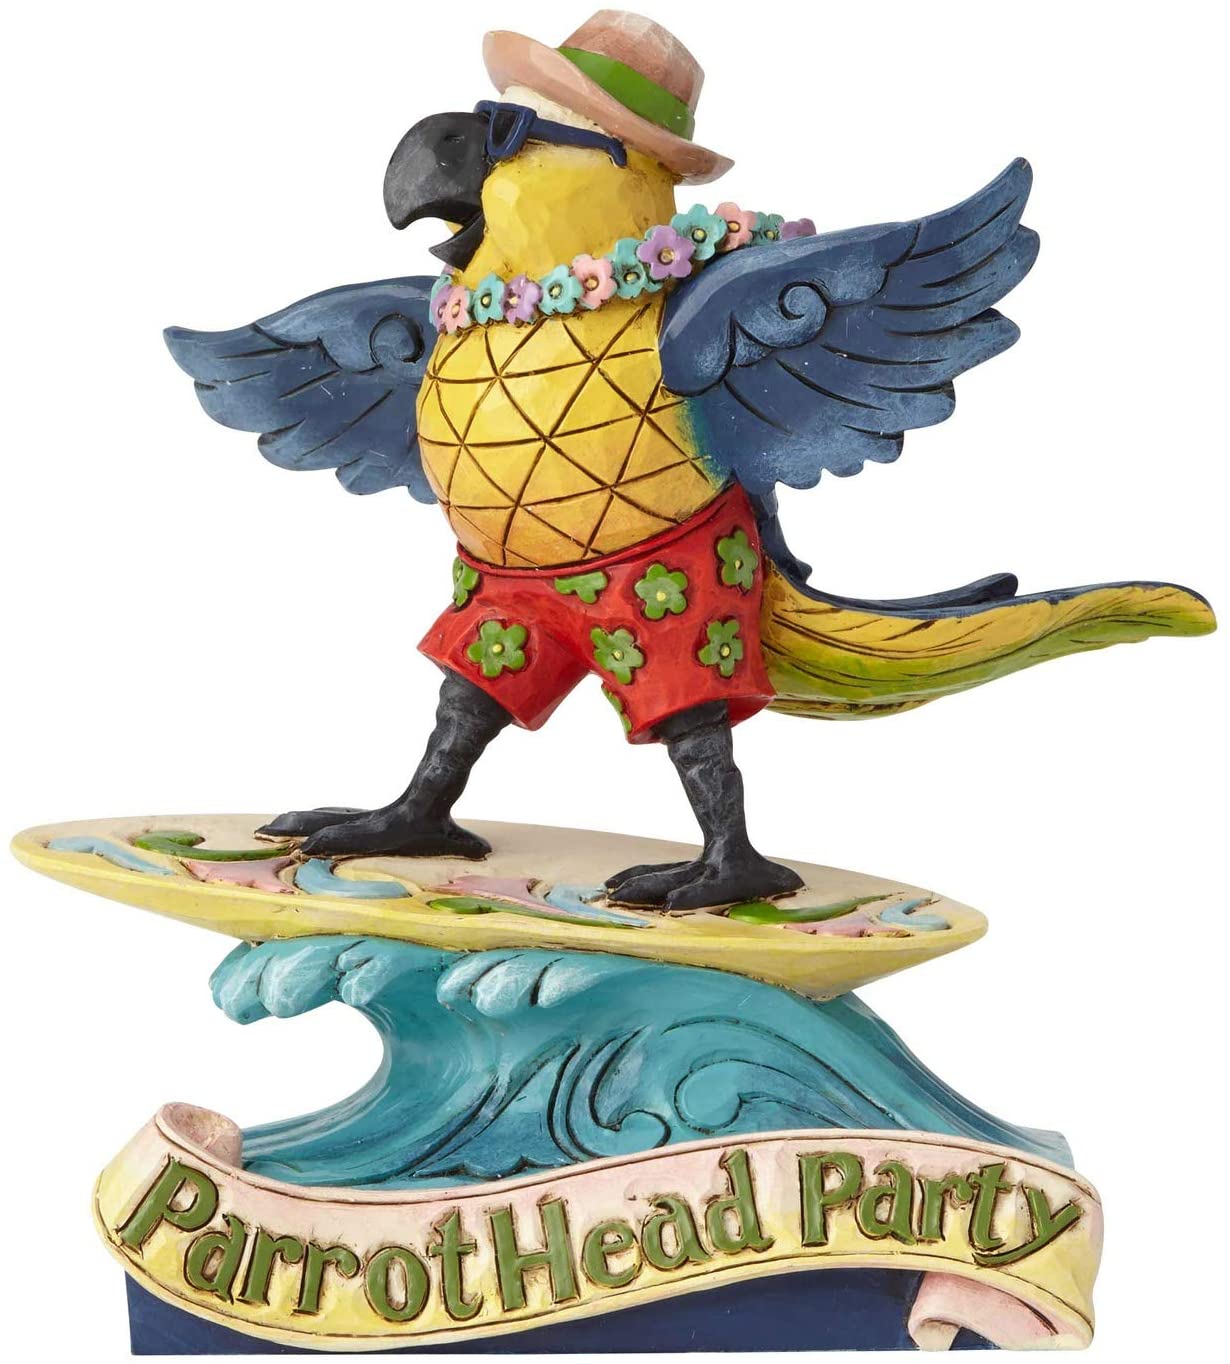 Margaritaville Parrot Head Party by Jim Shore (Retired)